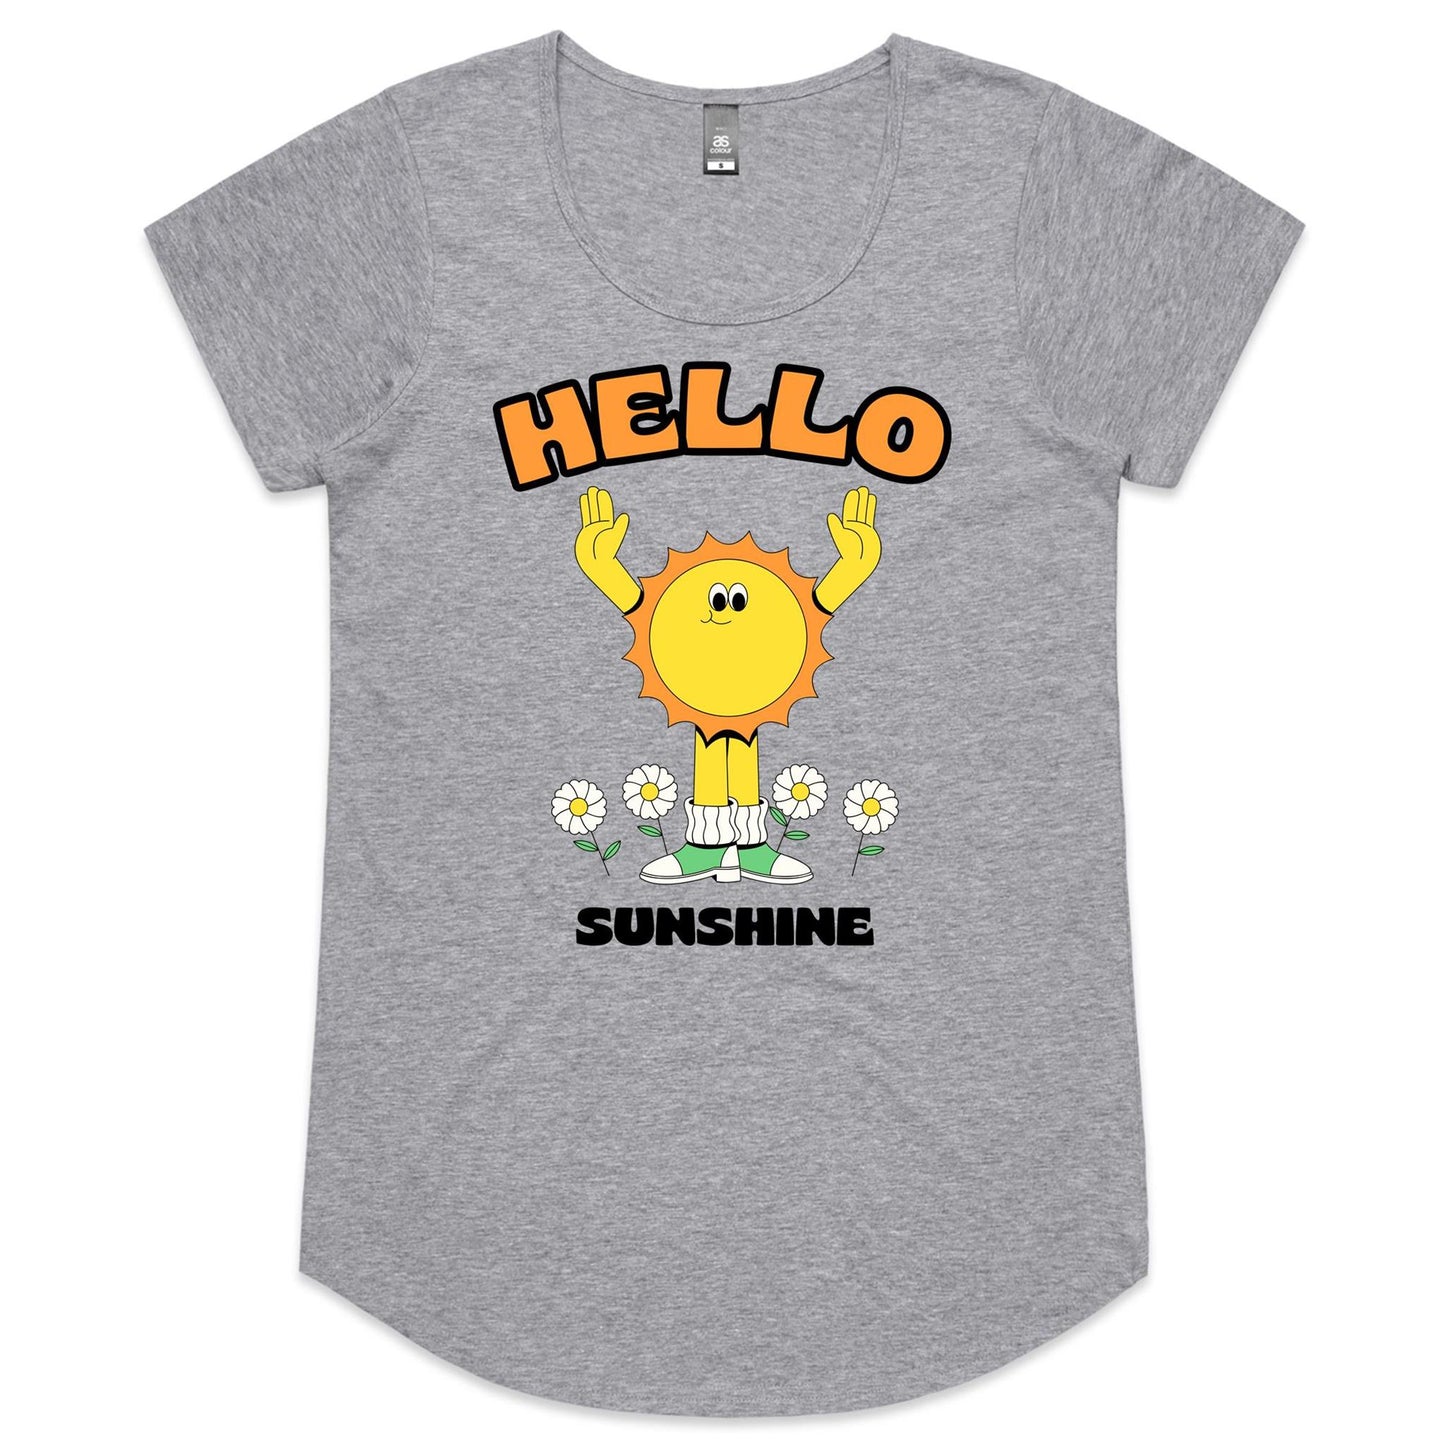 Hello Sunshine - Womens Scoop Neck T-Shirt Grey Marle Womens Scoop Neck T-shirt Retro Summer